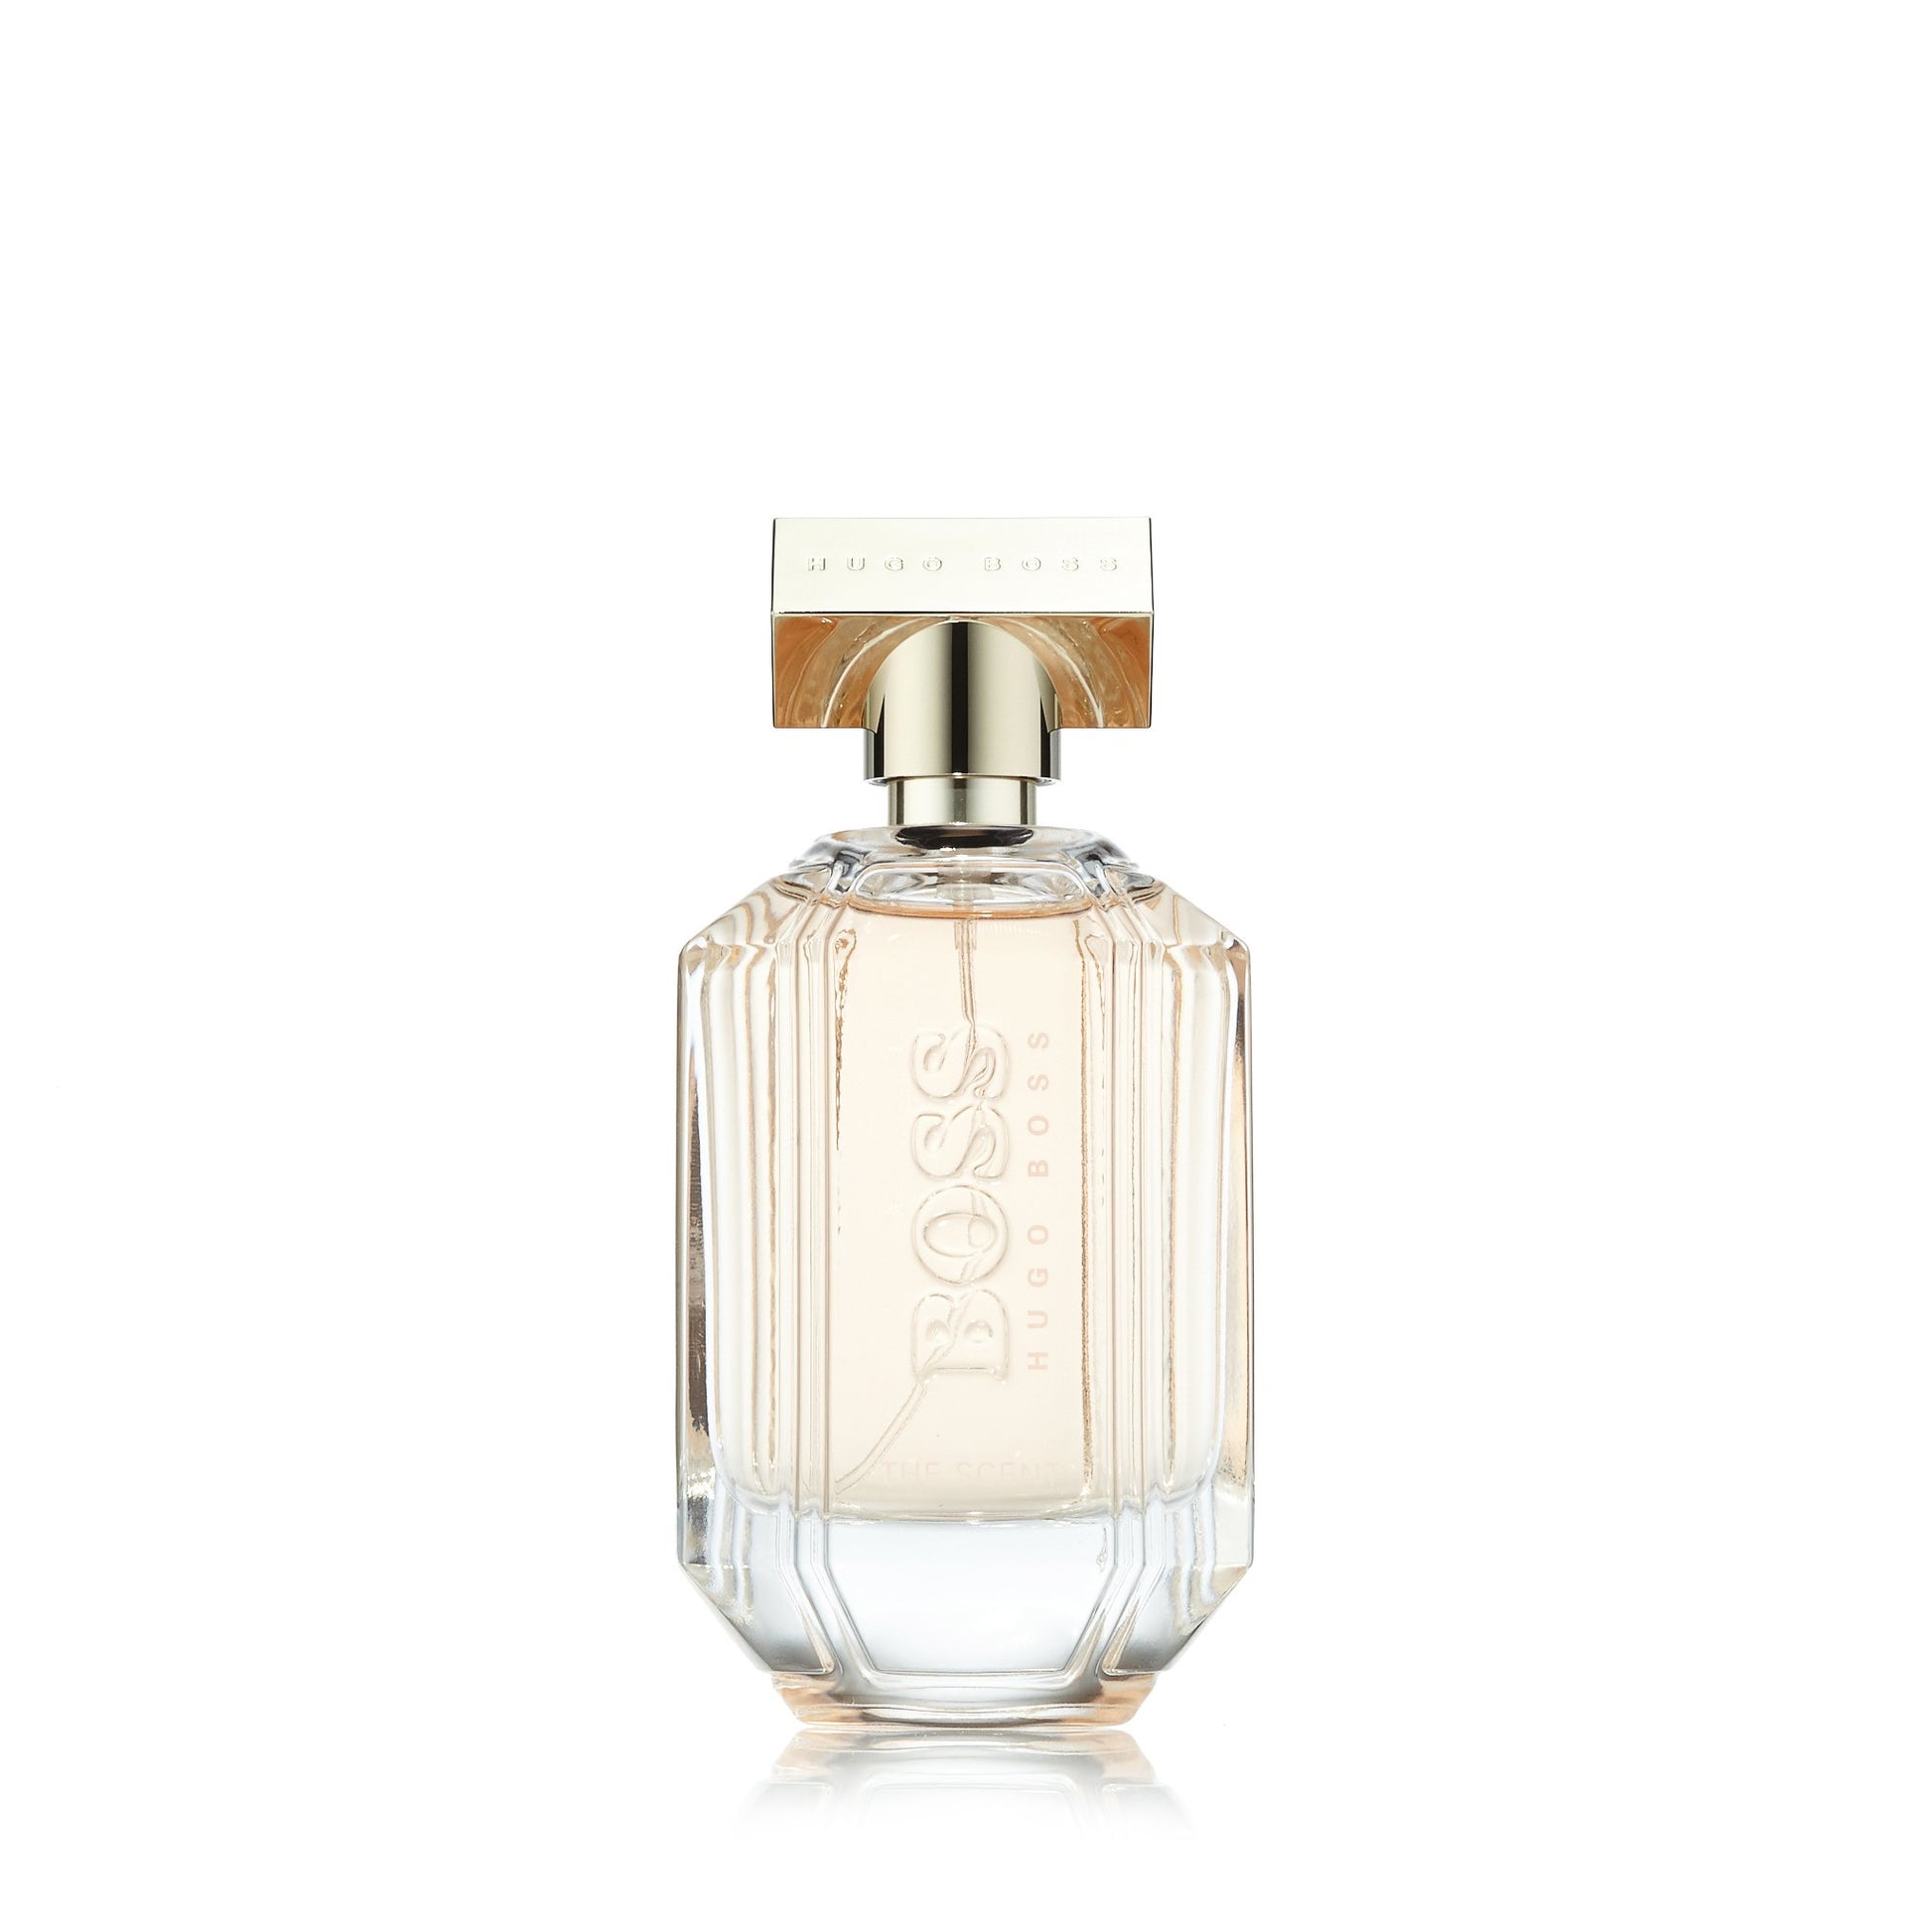 The Scent Eau de Parfum Spray for Women by Hugo Boss 3.3 oz. Click to open in modal